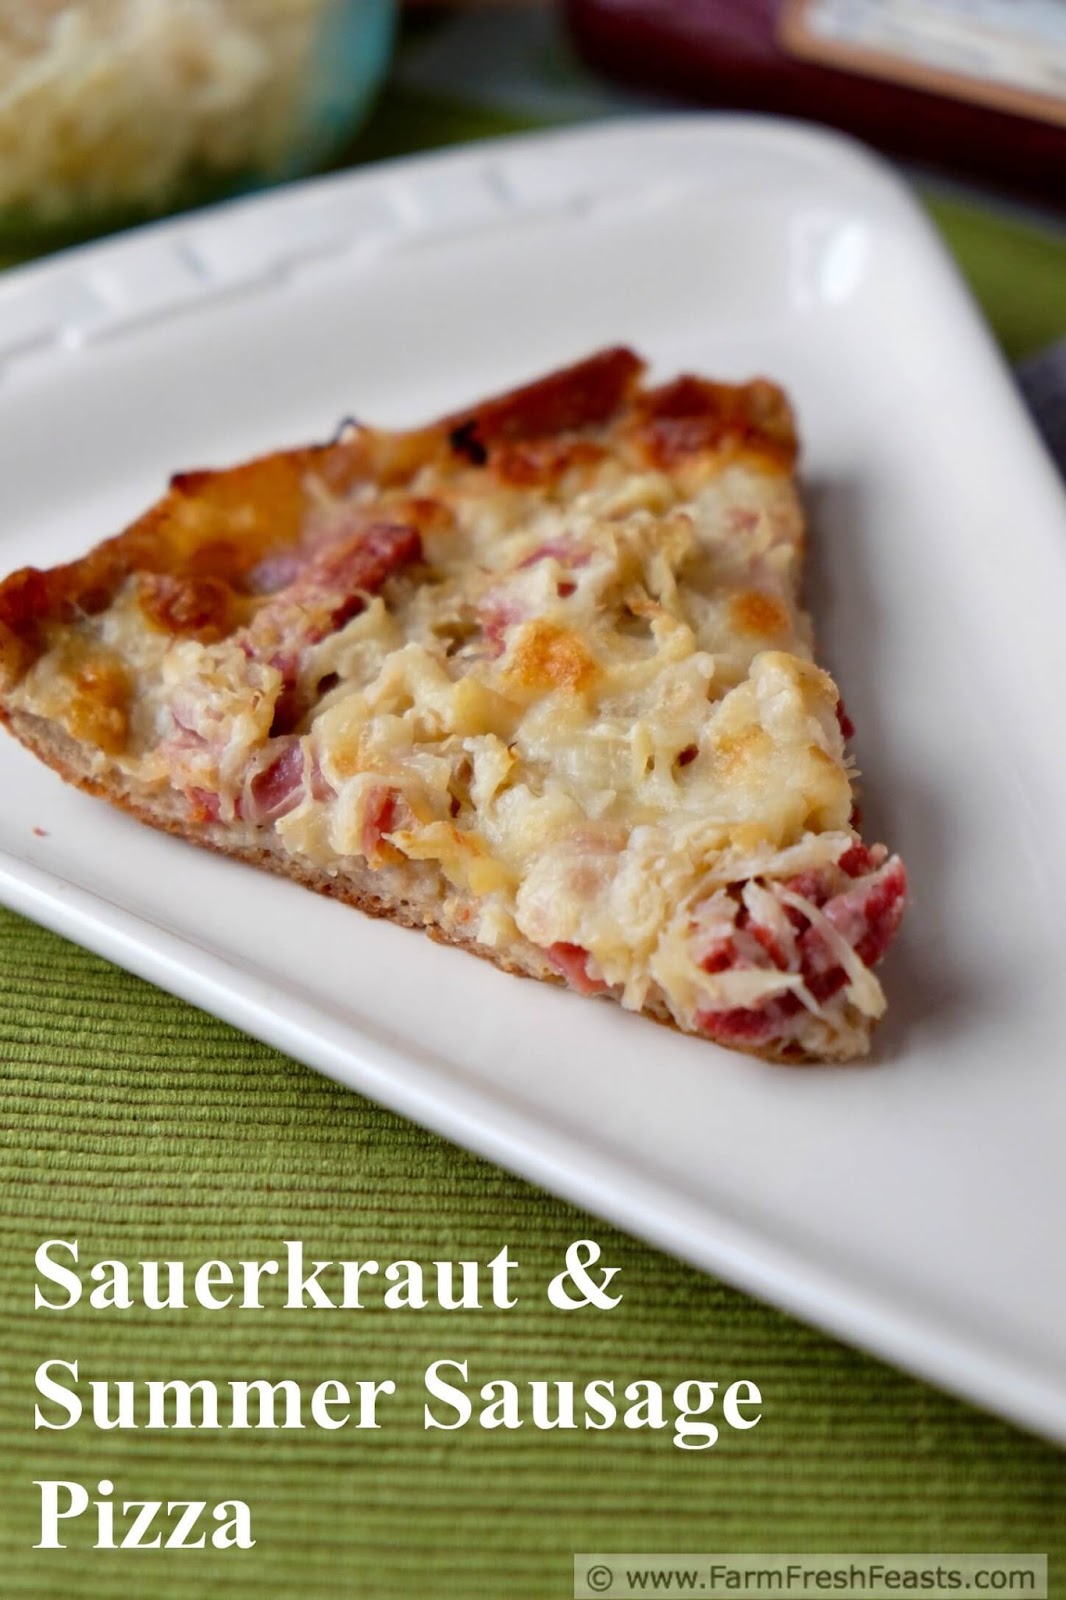 Farm Fresh Feasts: Sauerkraut and Summer Sausage Pizza